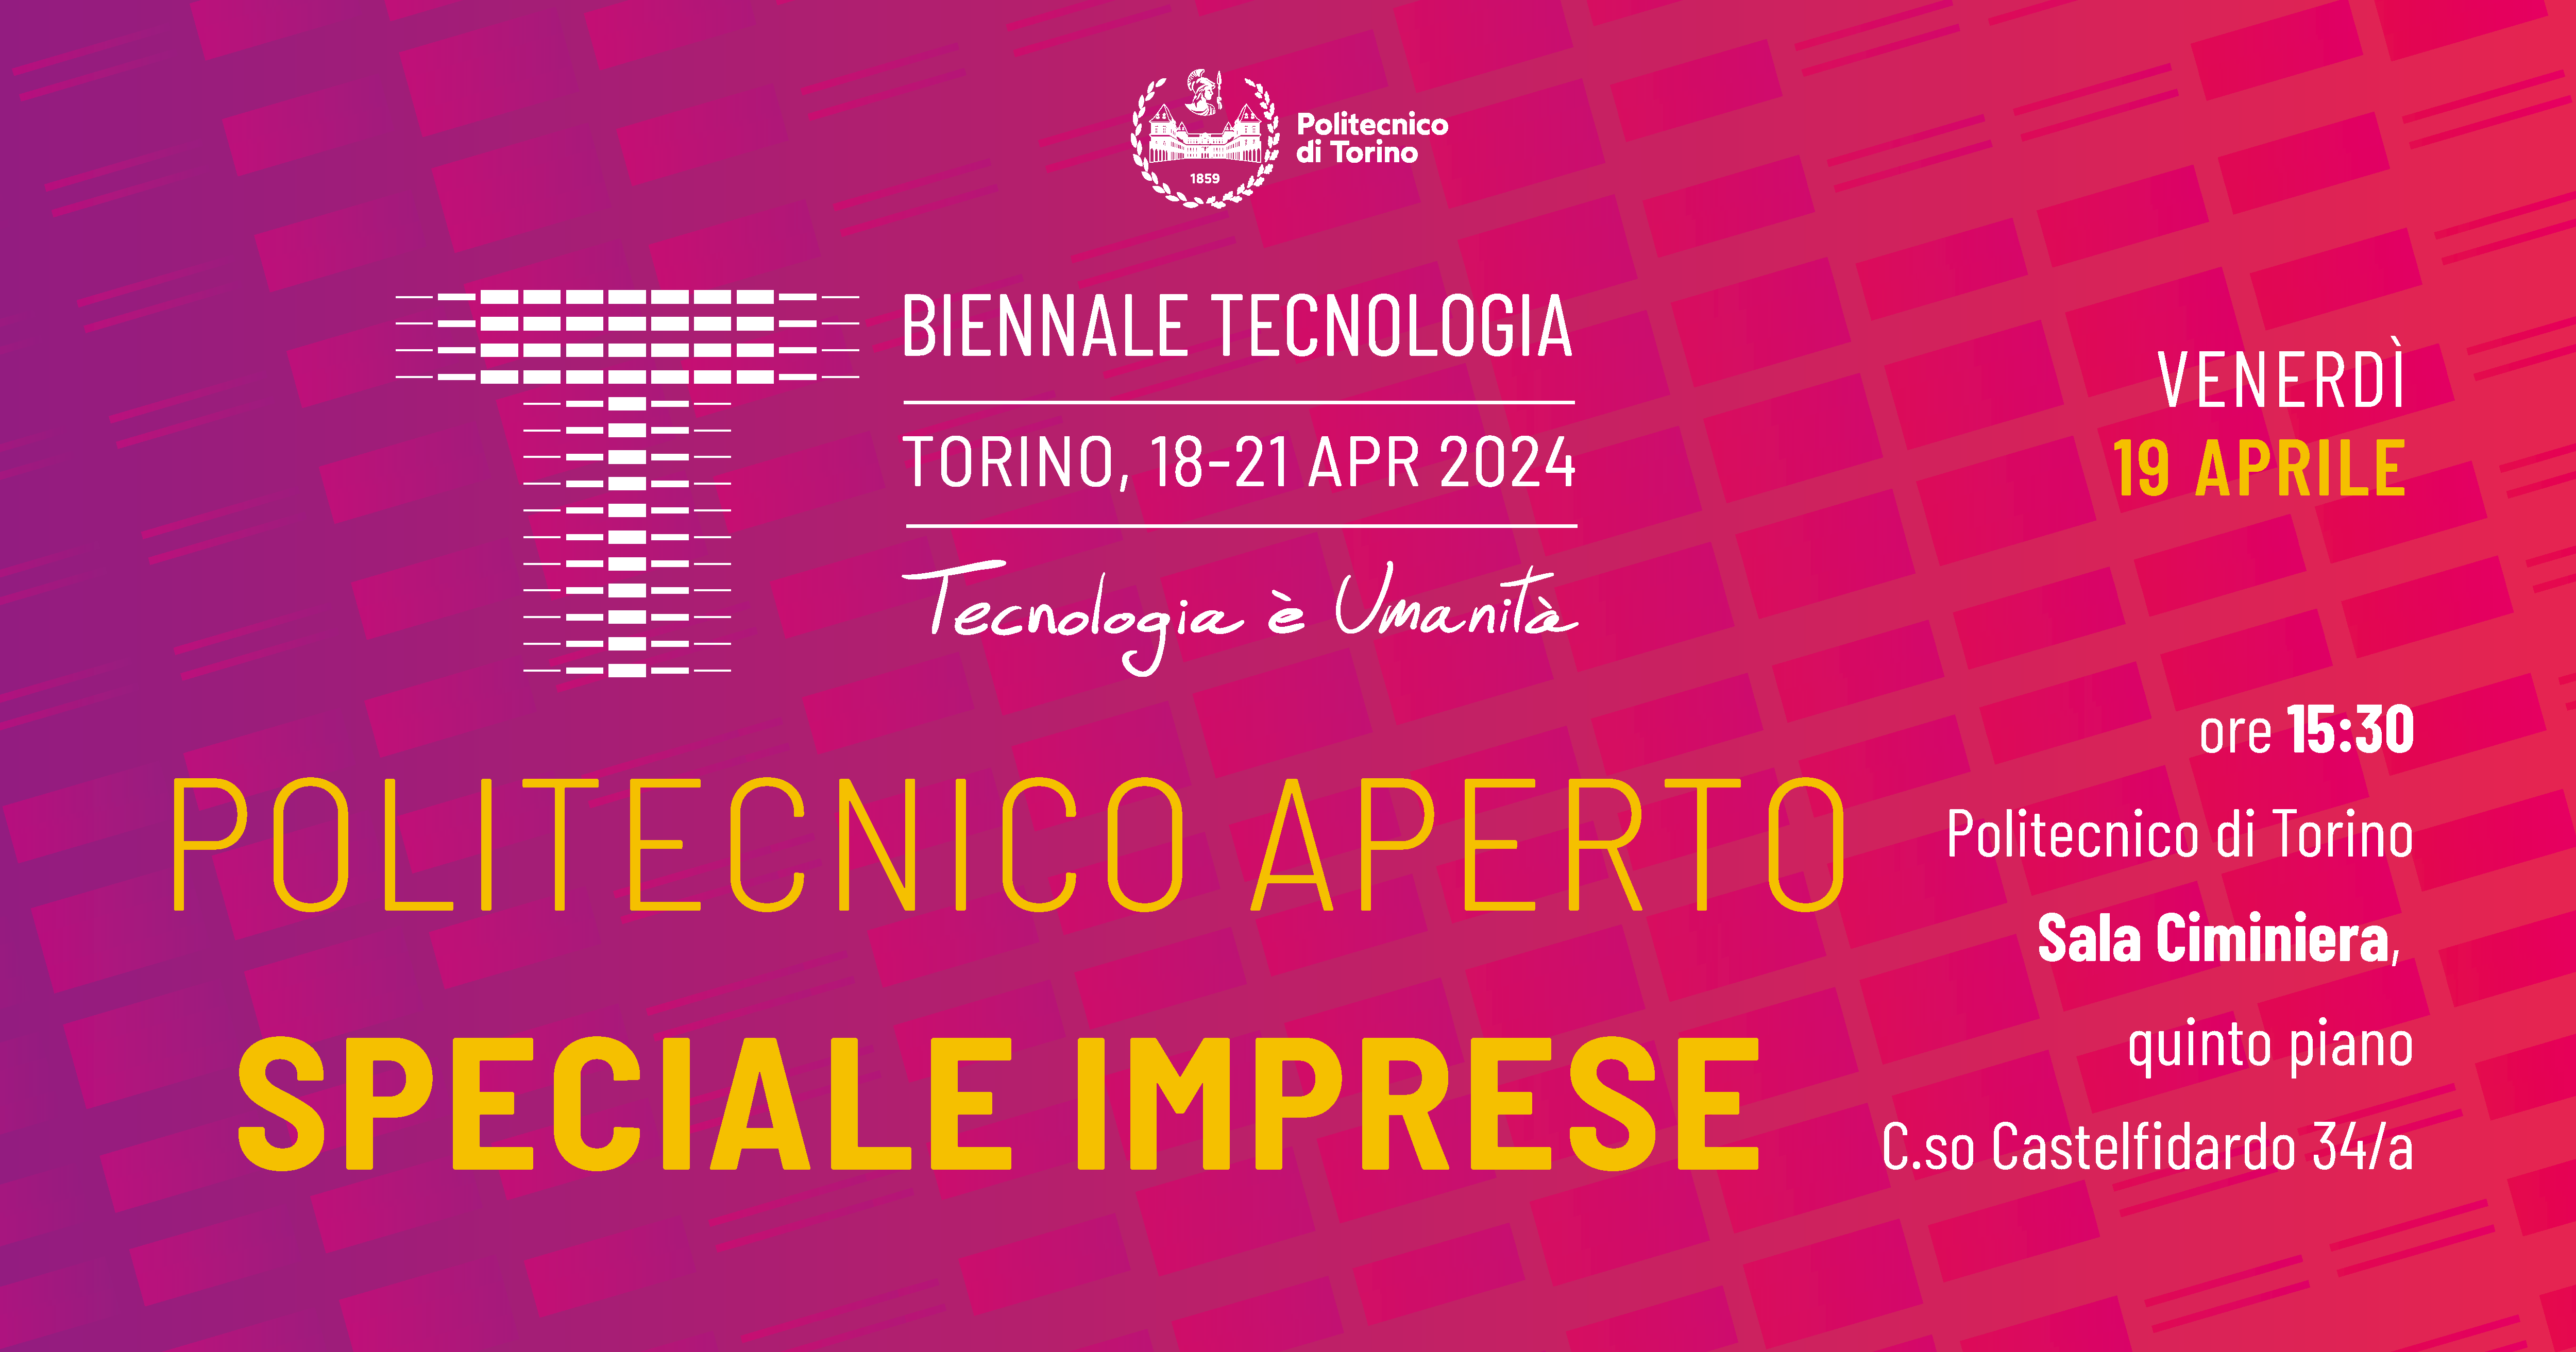 Biennale Tecnologia 2024 - Politecnico Aperto: Speciale Imprese